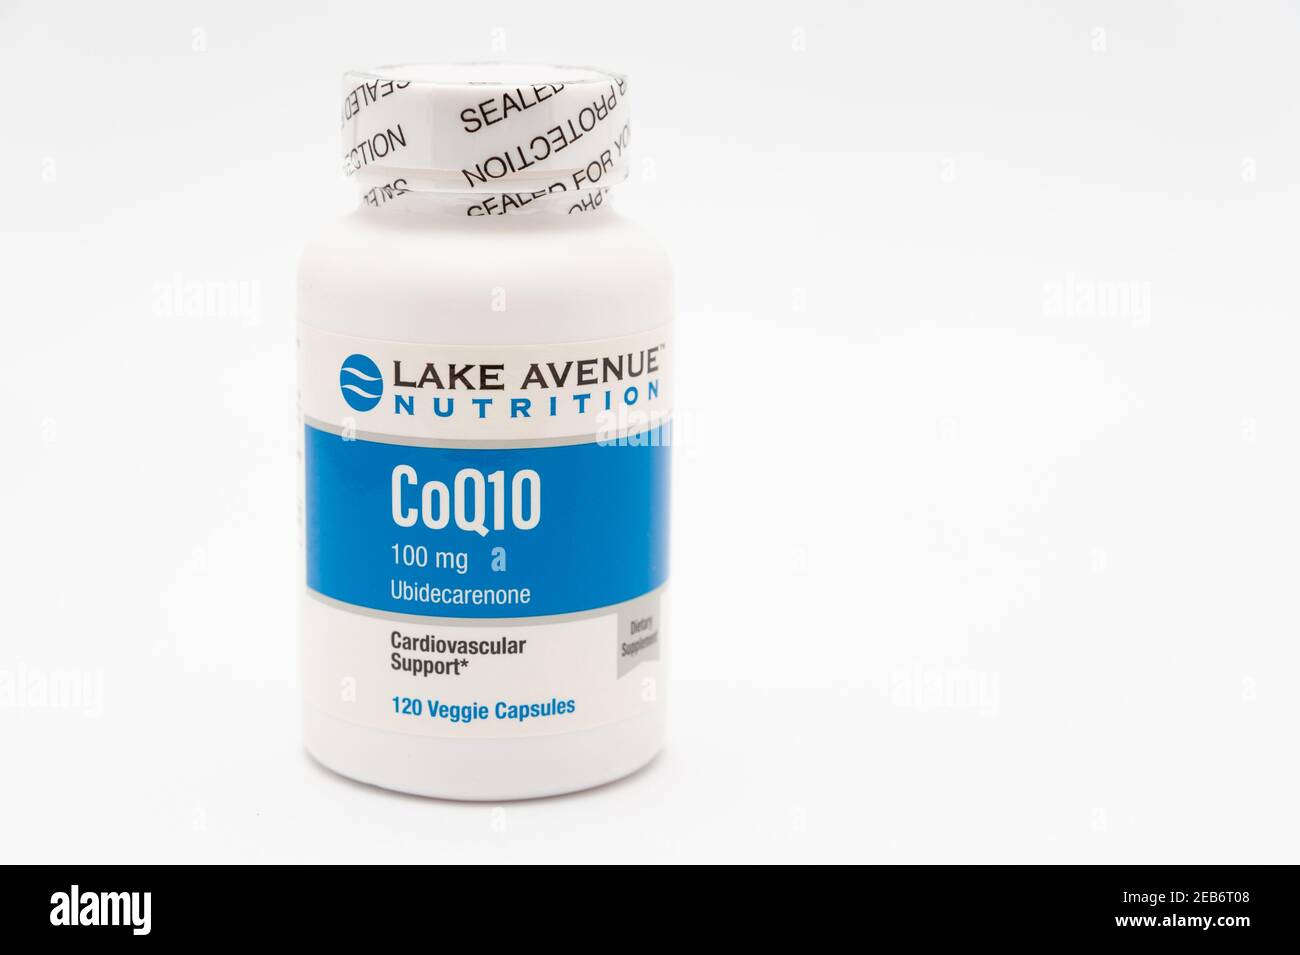 Lake Avenue Nutrition Coq10 Usp Grade 100 Mg 120 Veggie Capsules Isolated On White Background 2525